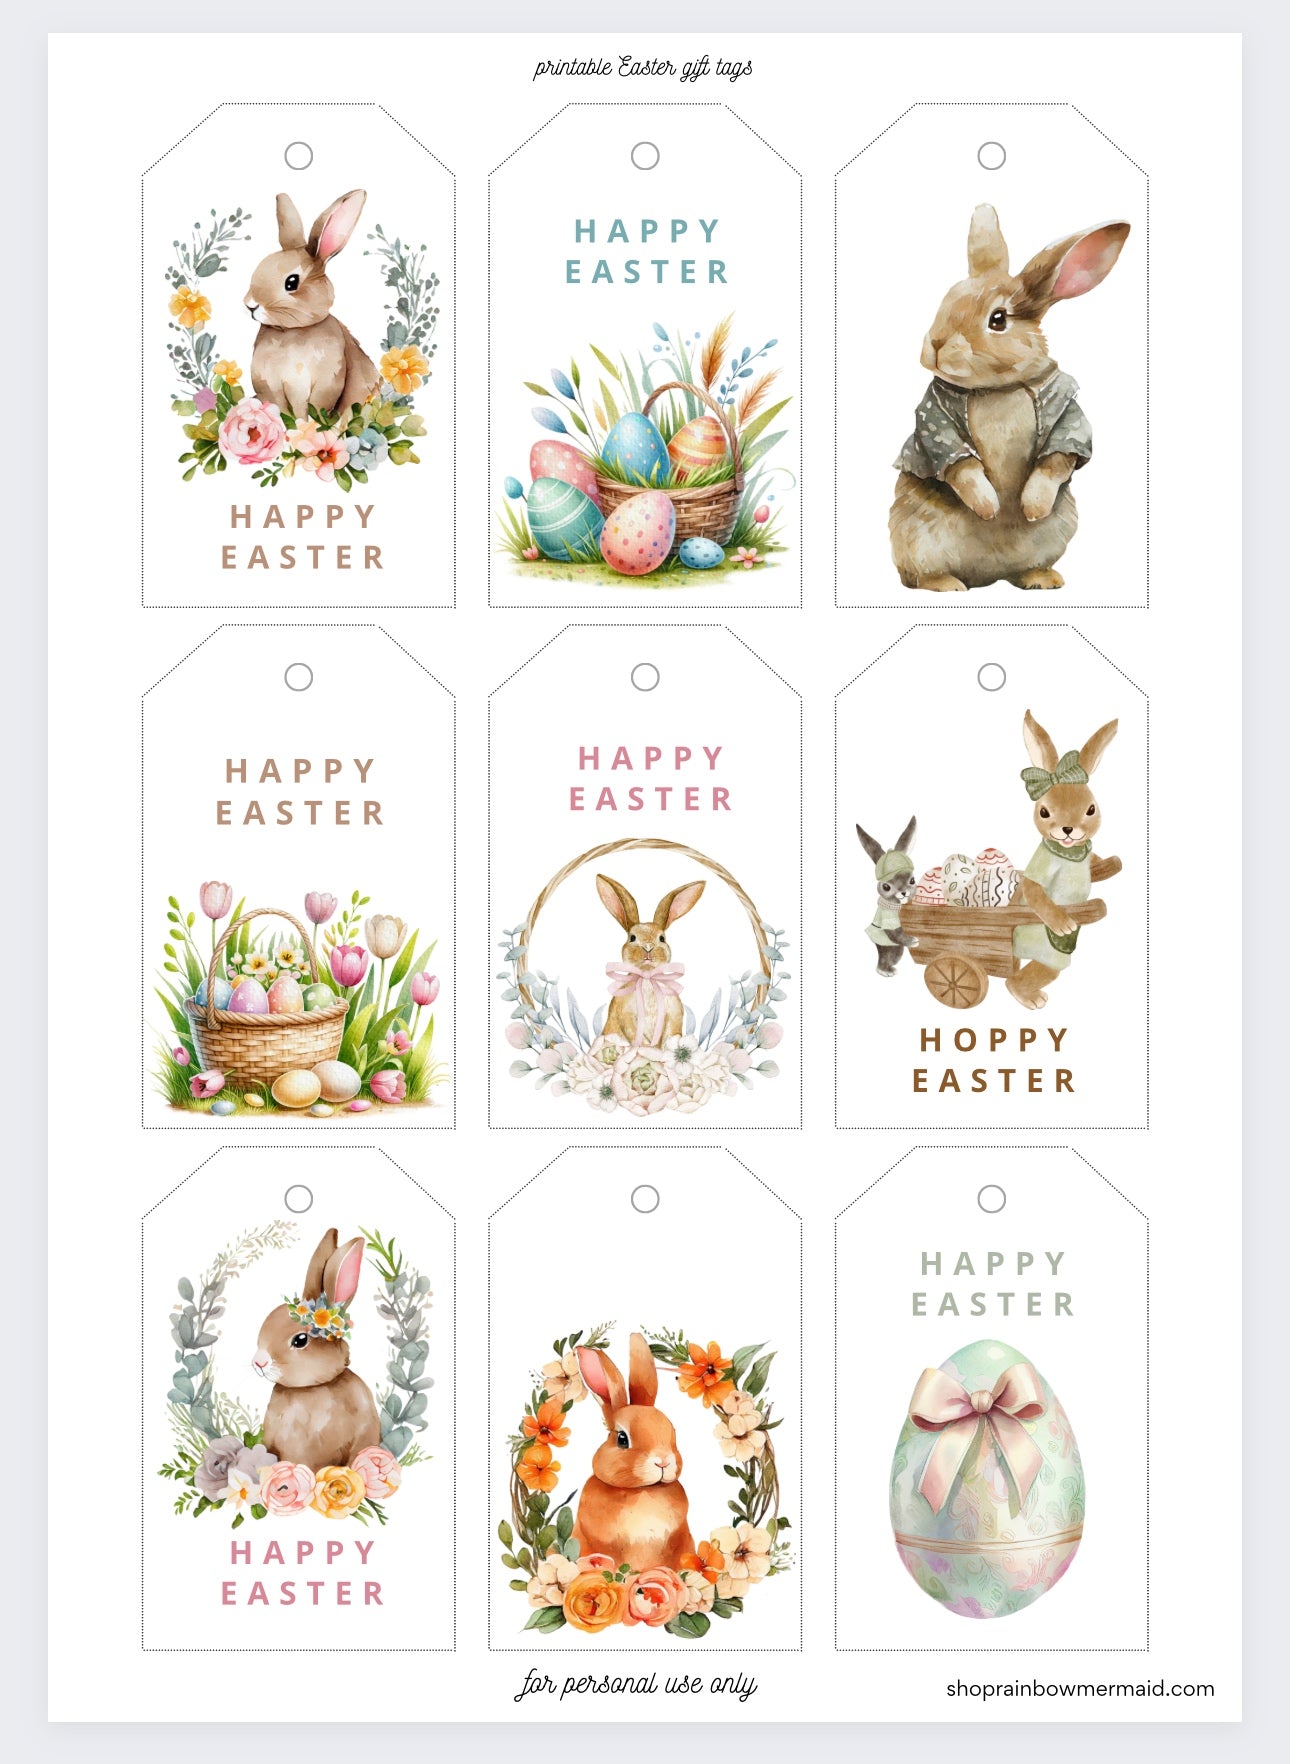 Vintage Easter Printable Gift Tags - FREE Digital Download